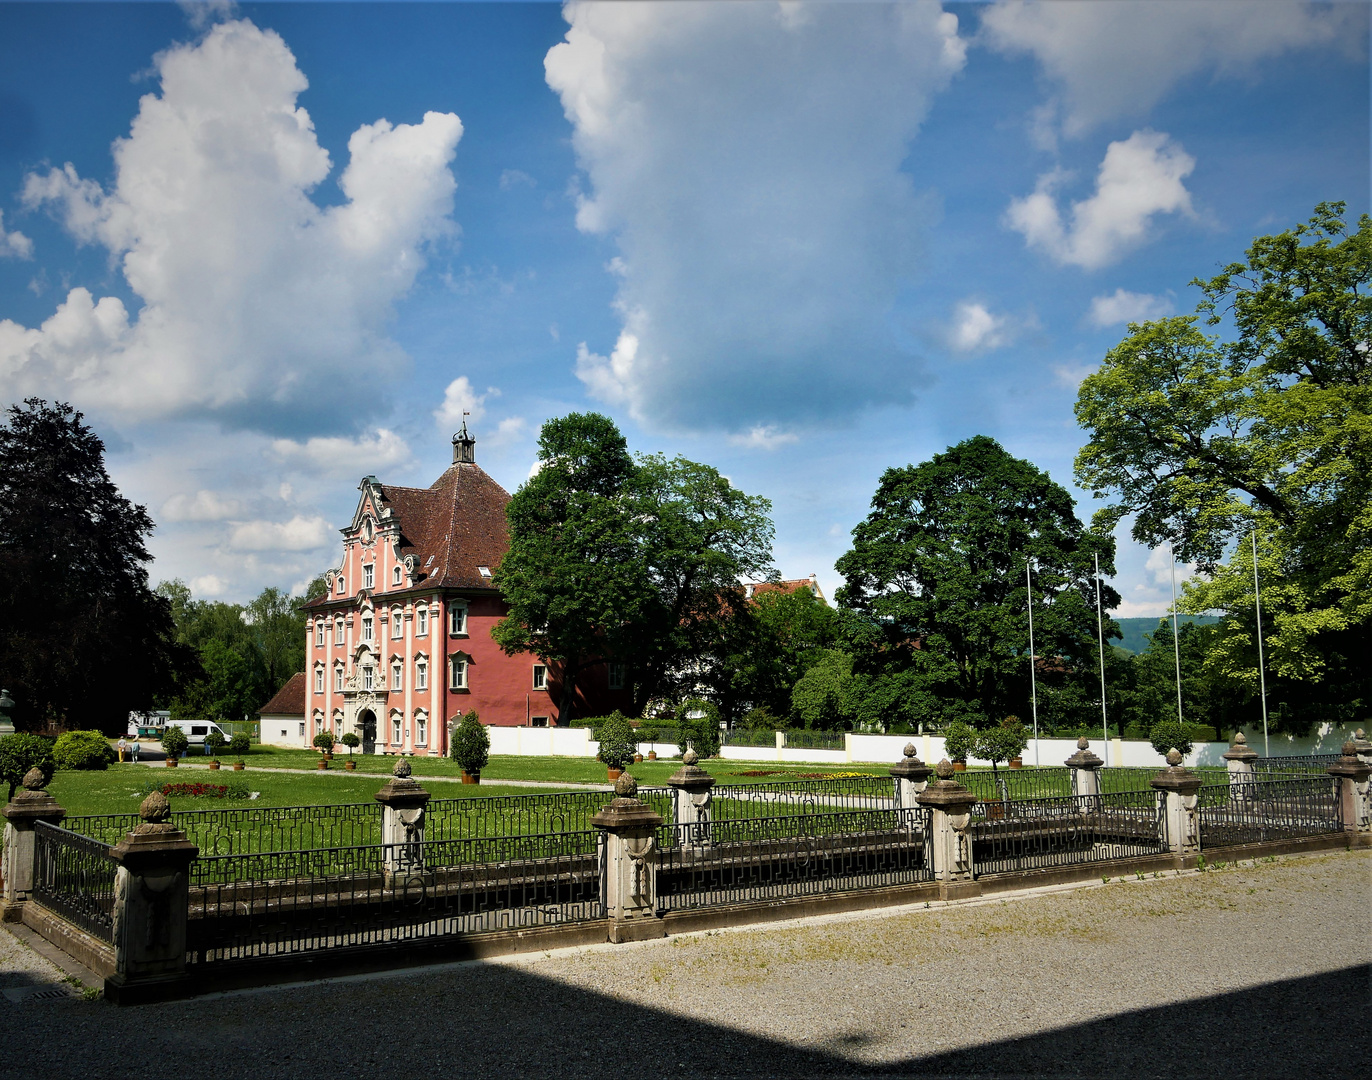 Urlaub am Bodensee 2021 - Schloss Salem Unteres Tor: Barocker Traum in Rosa